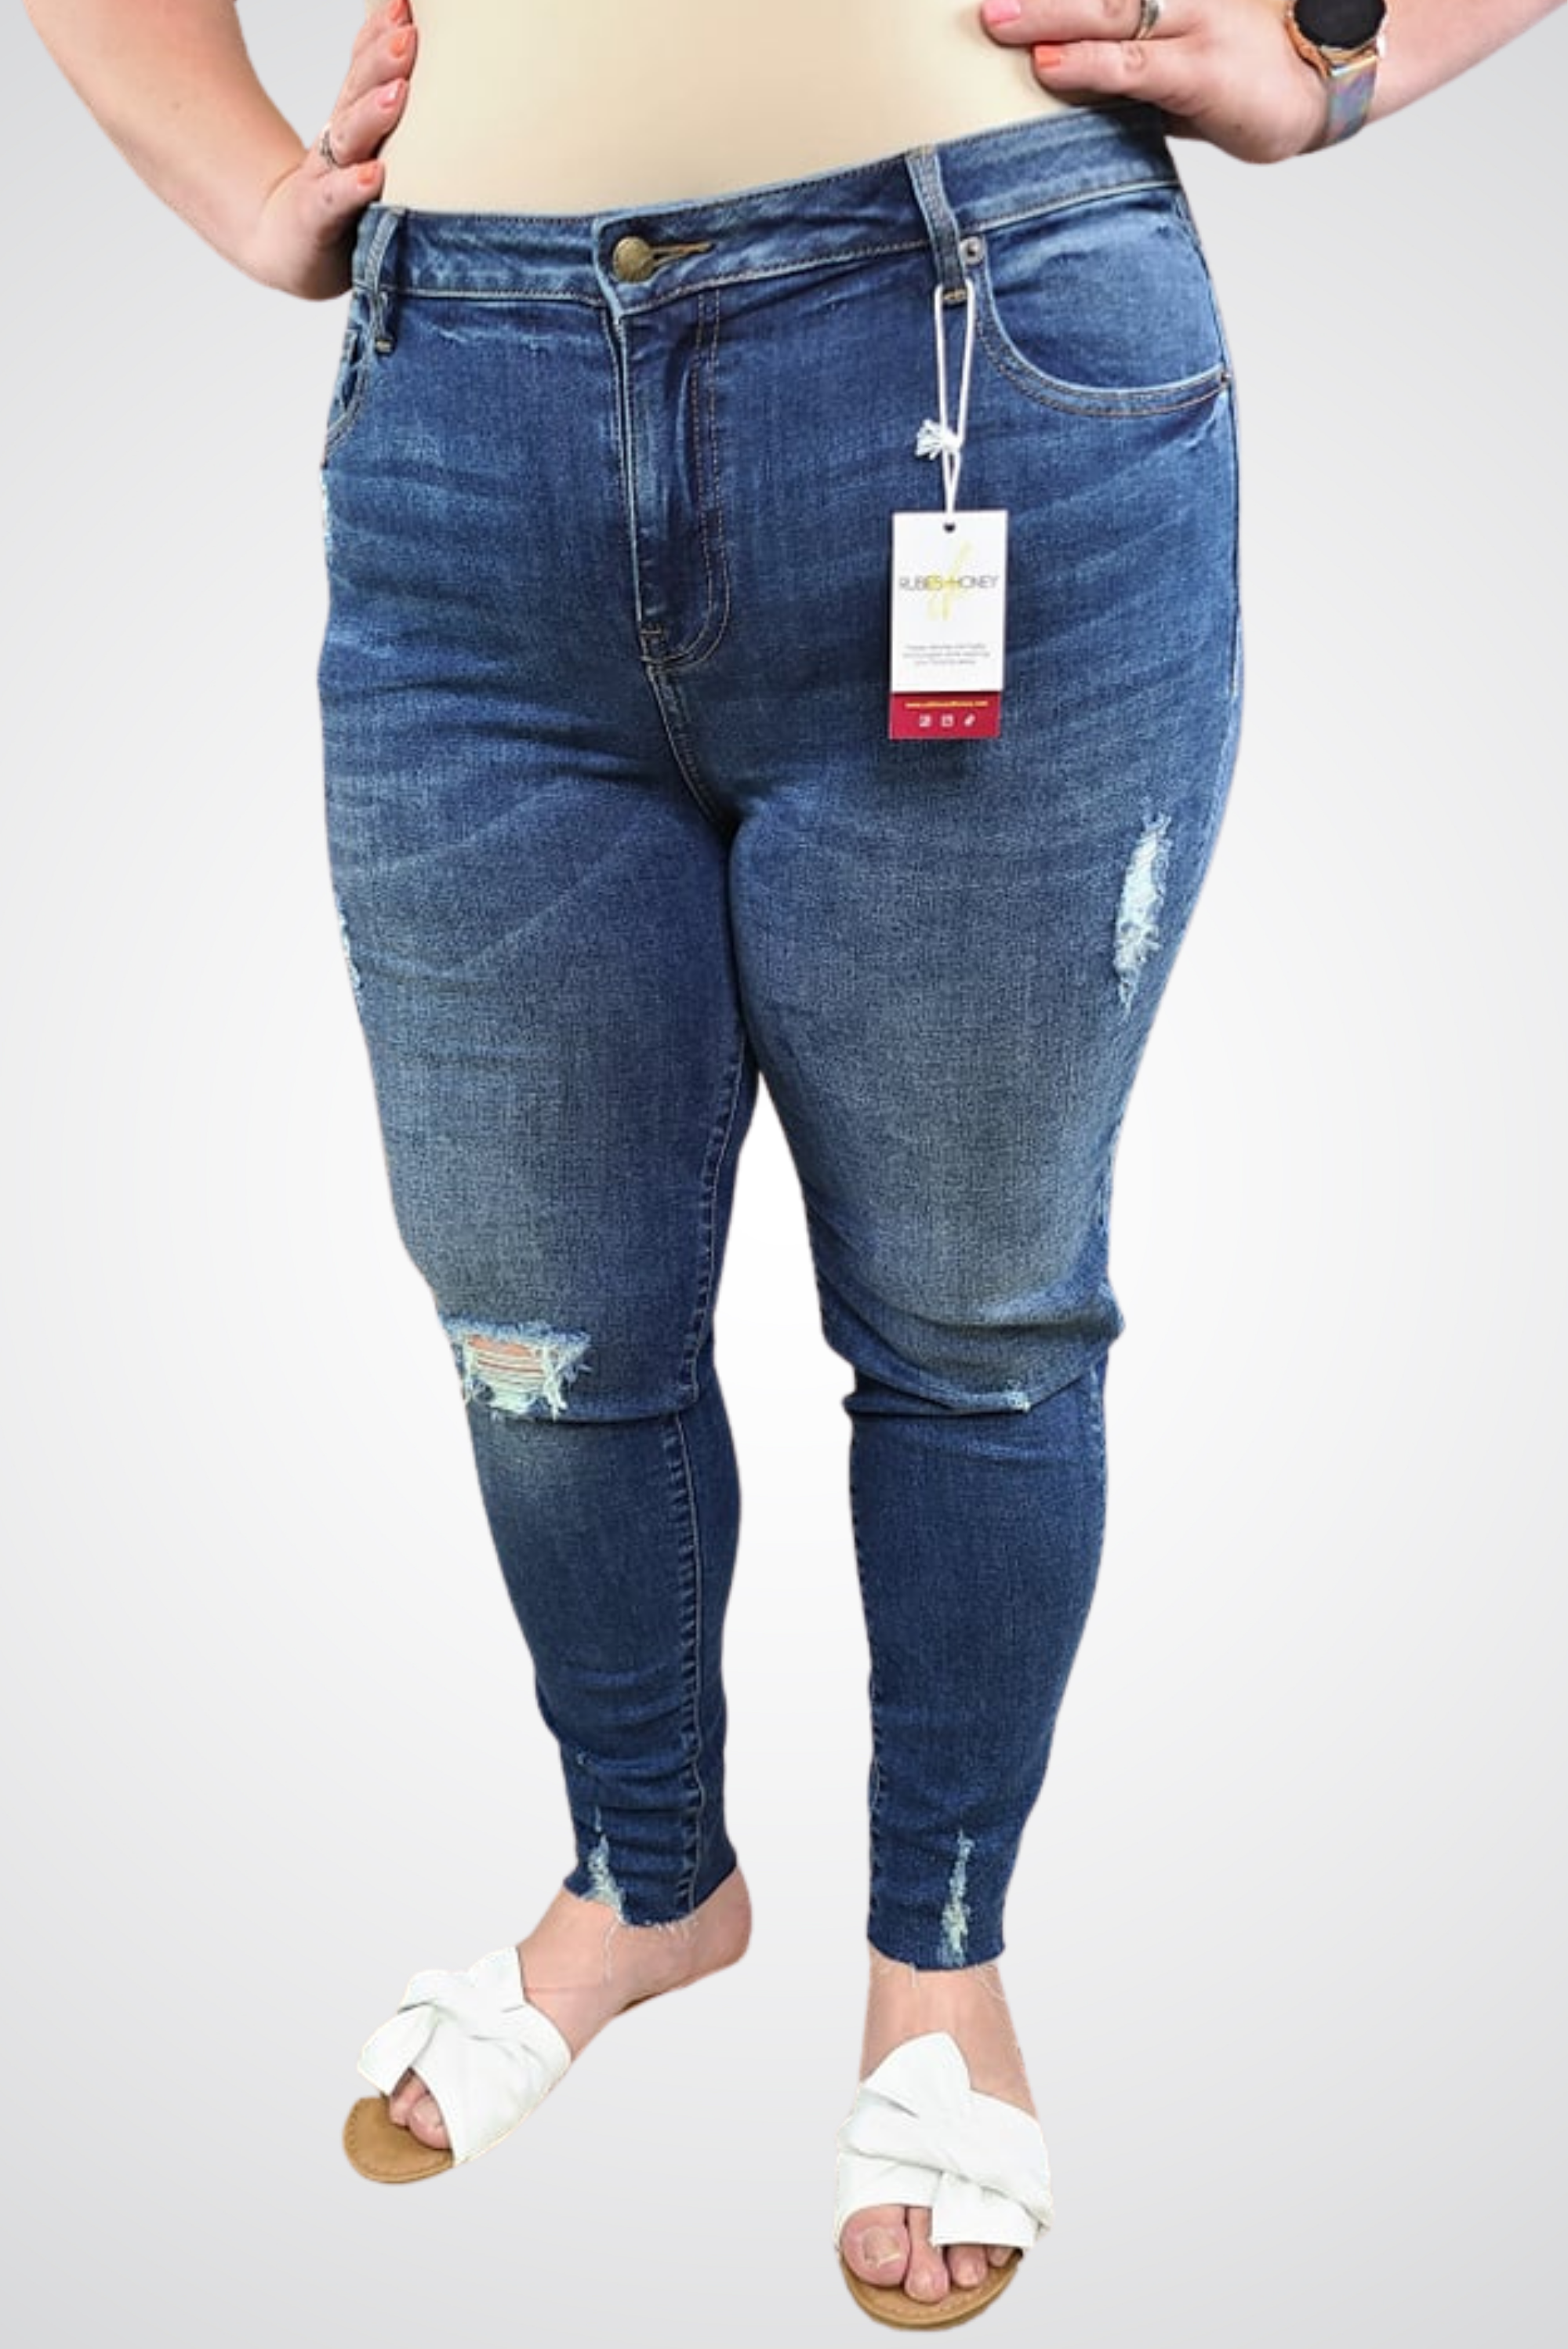 Express Women's Black Distressed Denim Leggings High Rise Skinny Jeans Size  4